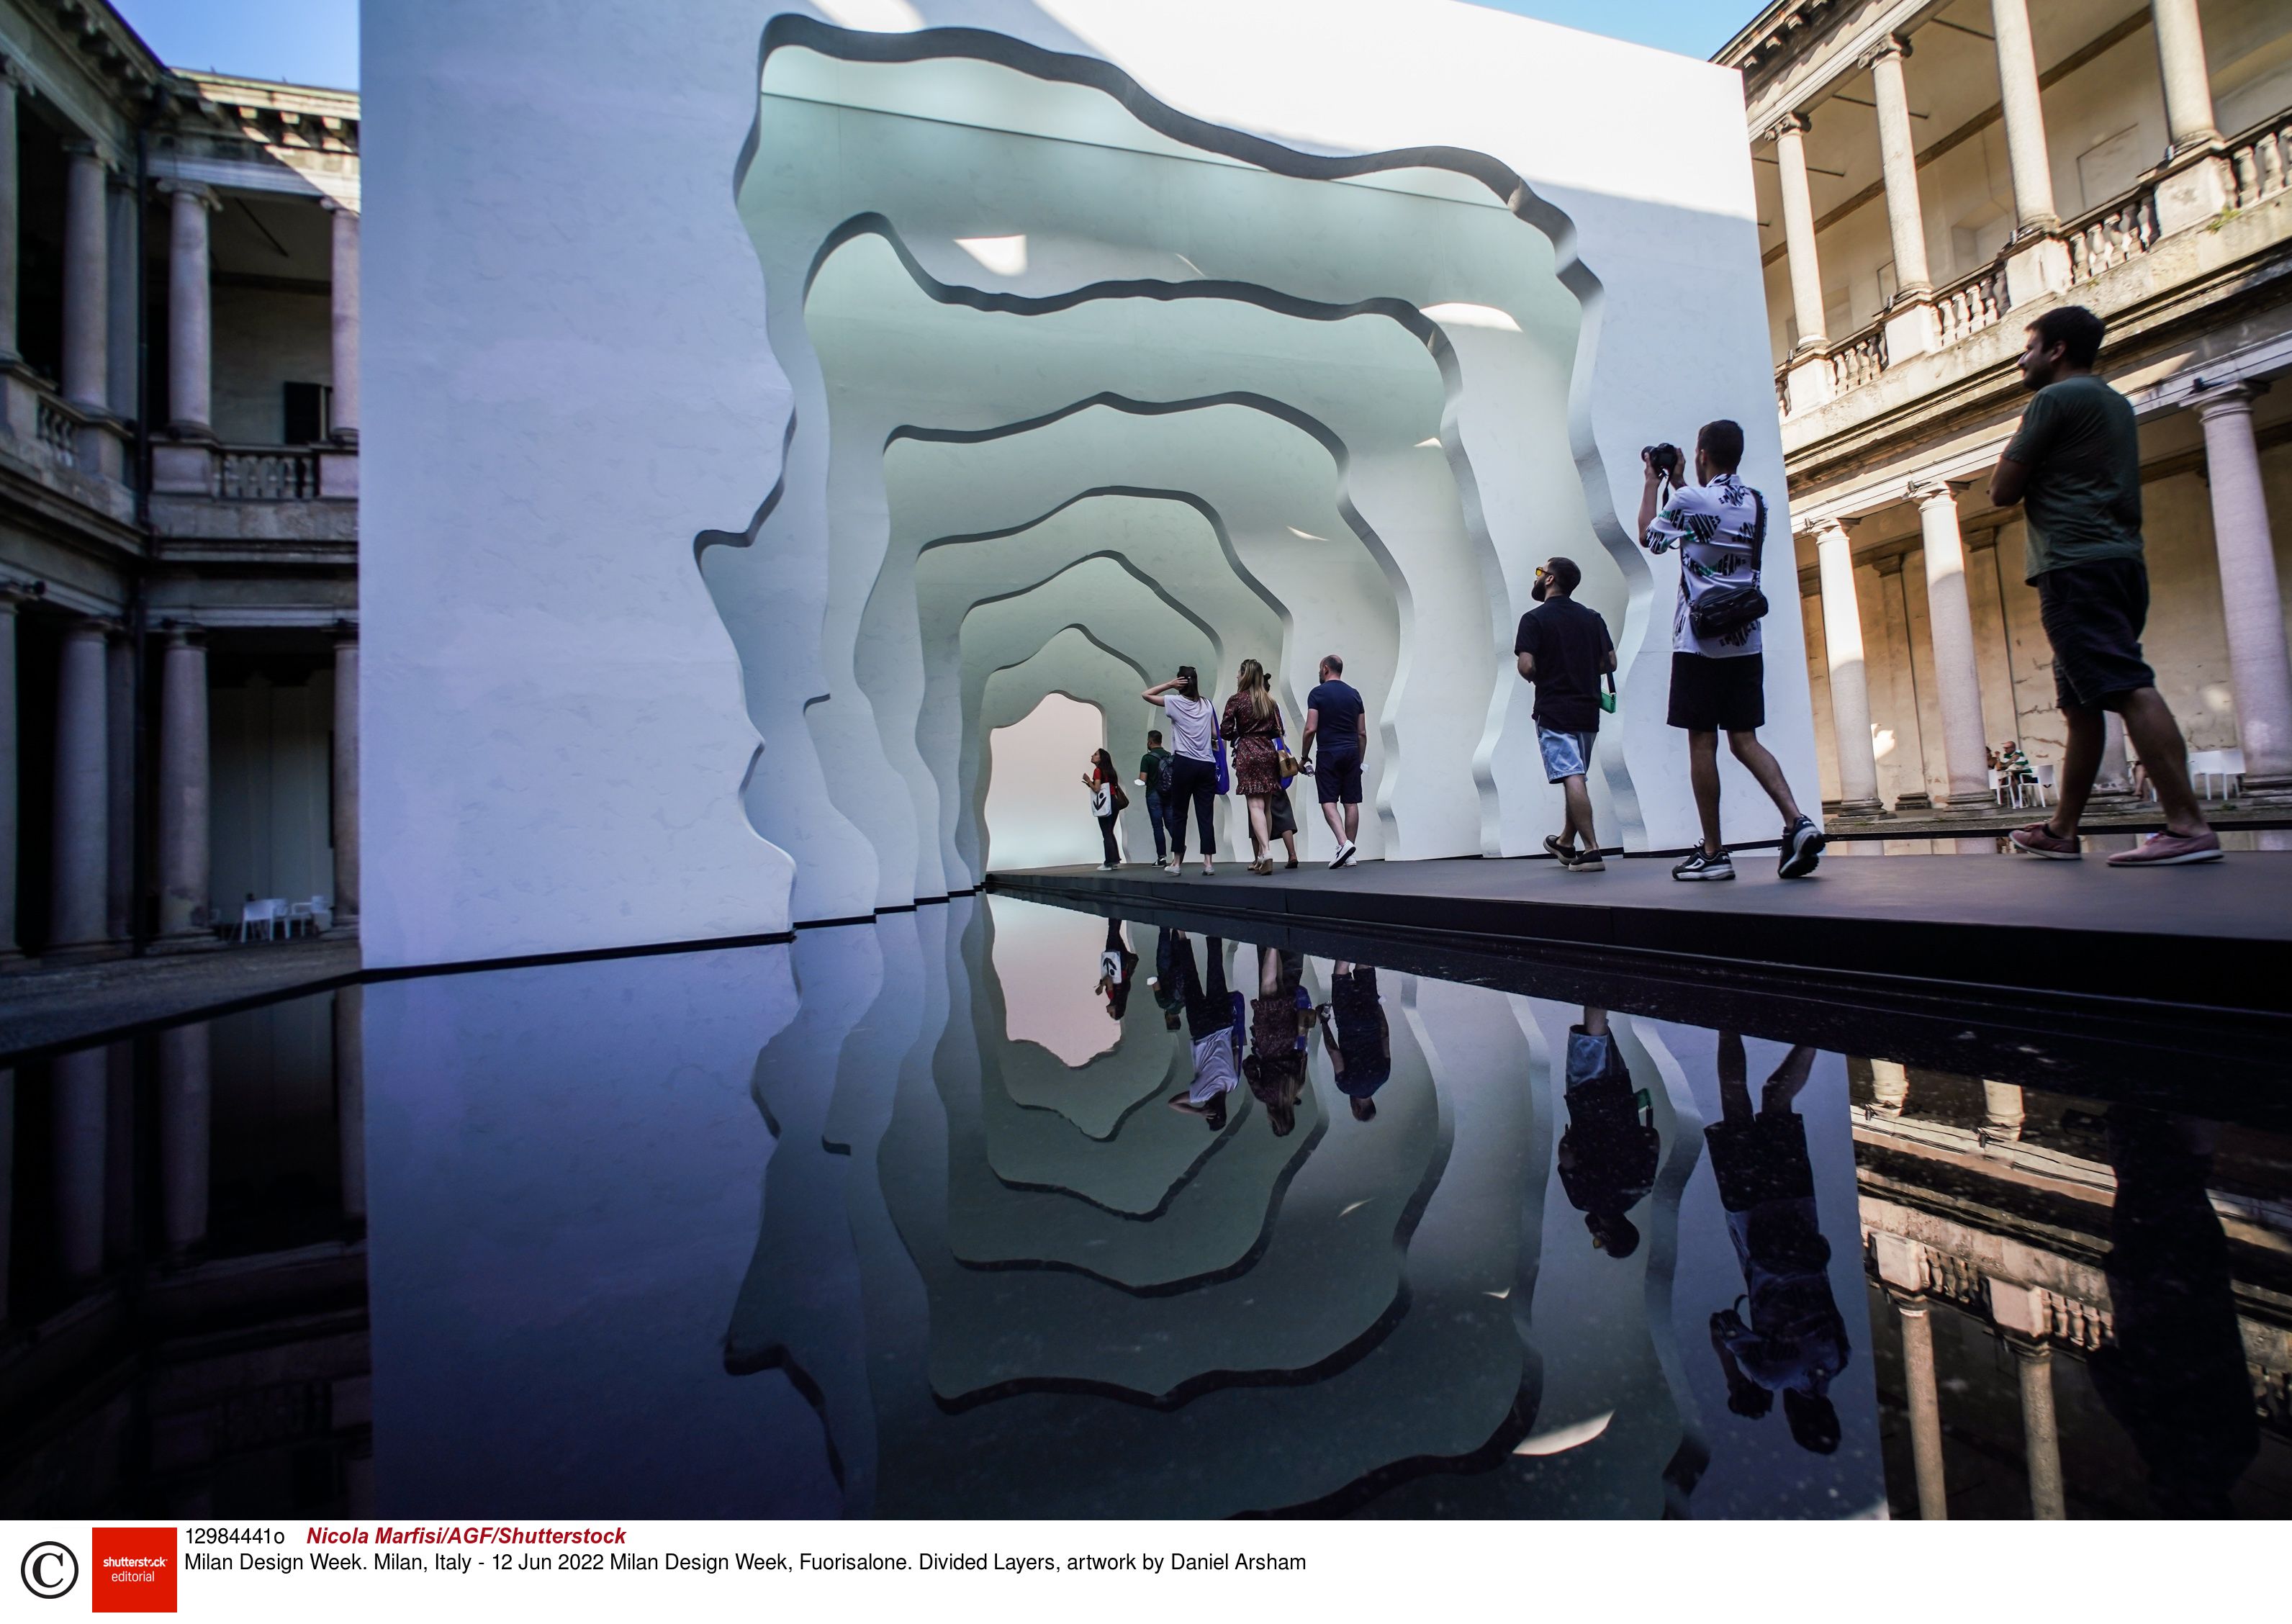 Daniel Arsham 的作品多為「單色」，圖為 2022年 6 月米蘭設計週的展品，與美國百年廚衛品牌 Kohler 合作推出名為《 Divided Layers 》的裝置藝術，面板上參考了 3D 列 印的水槽結構，中間走道圍繞著清晰的鏡面效果水池，讓觀者感受彷彿化身為水、 置身水槽內。